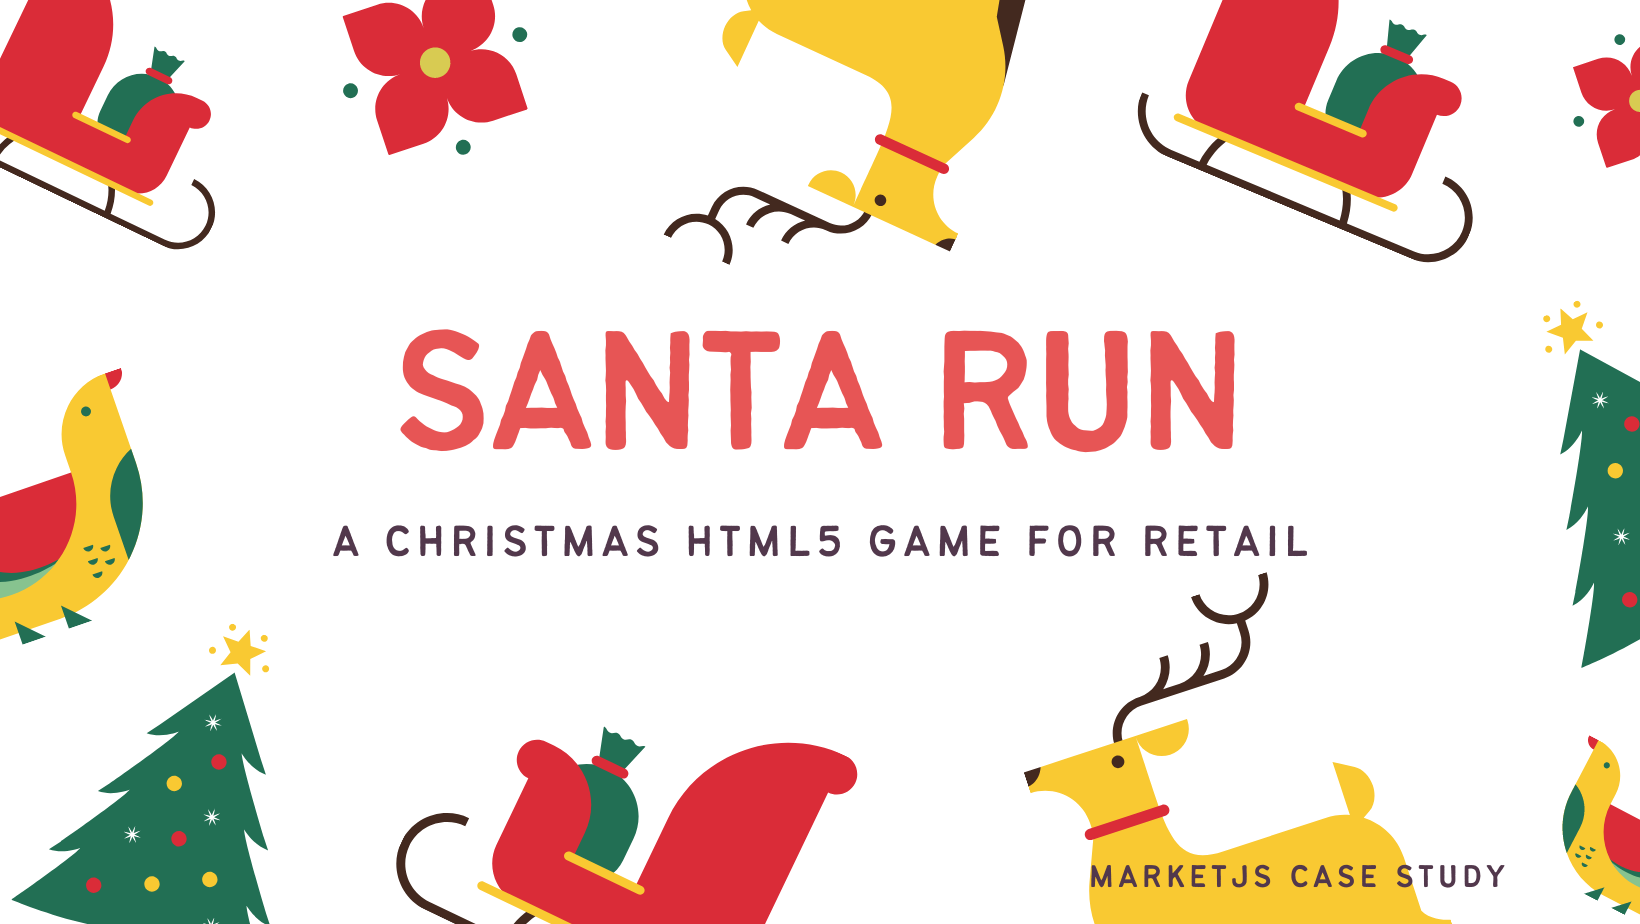 Santa Run, a Christmas HTML5 Game For Retail